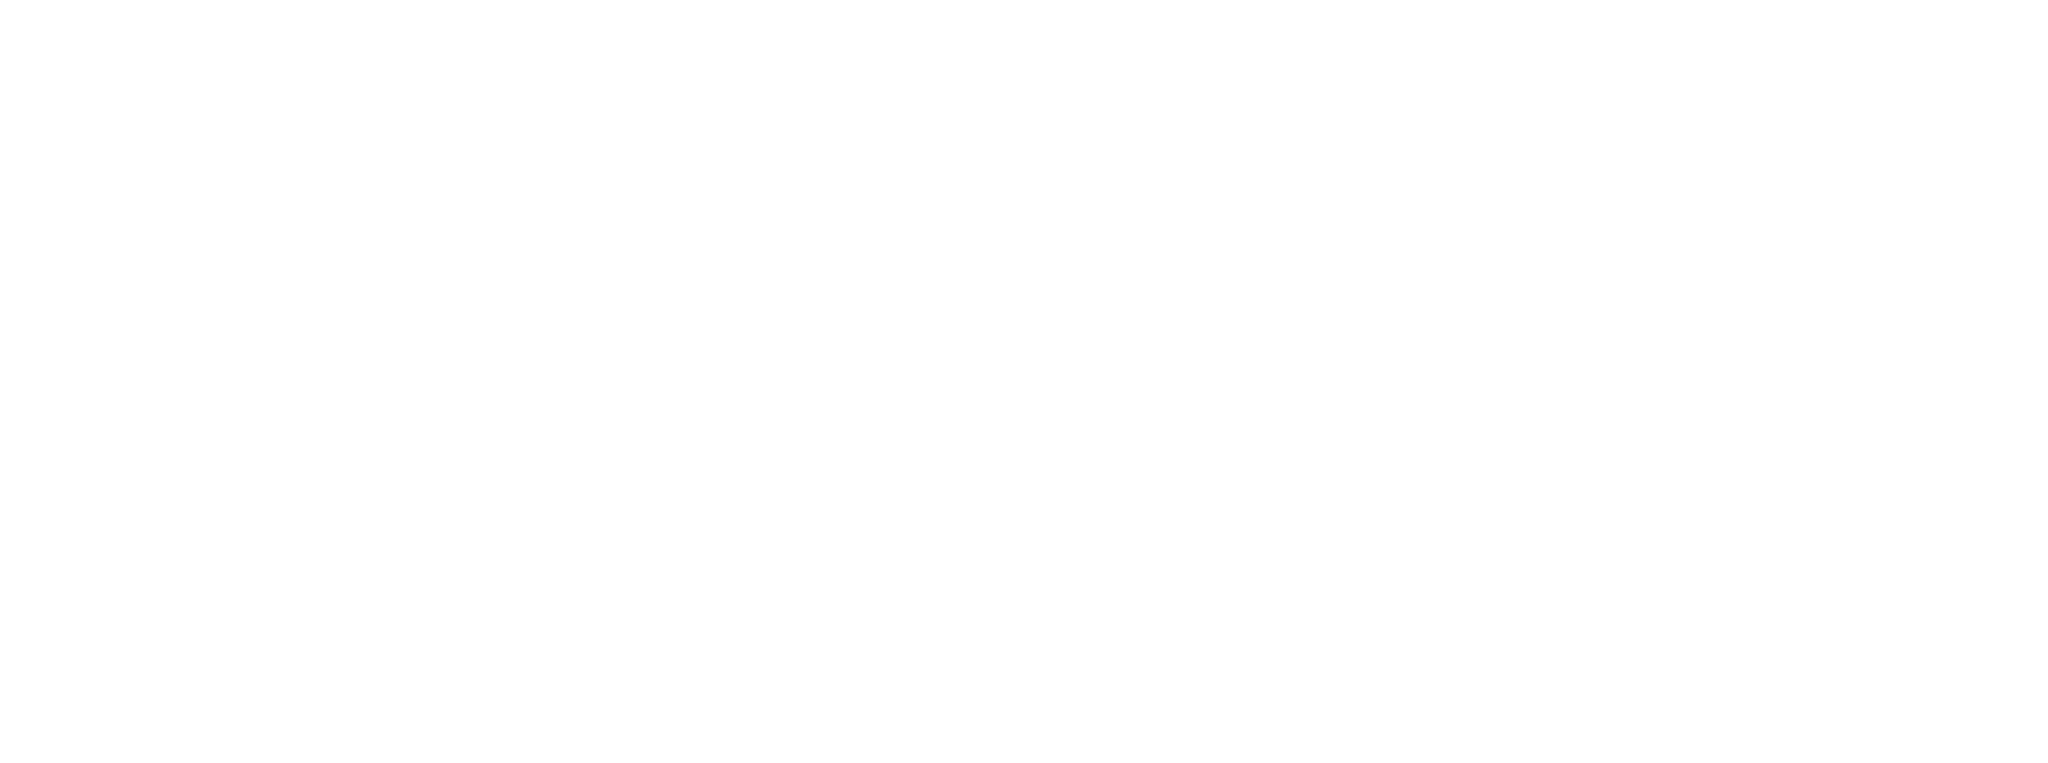 BUSINESS SUCCESS EDUCATORS 02